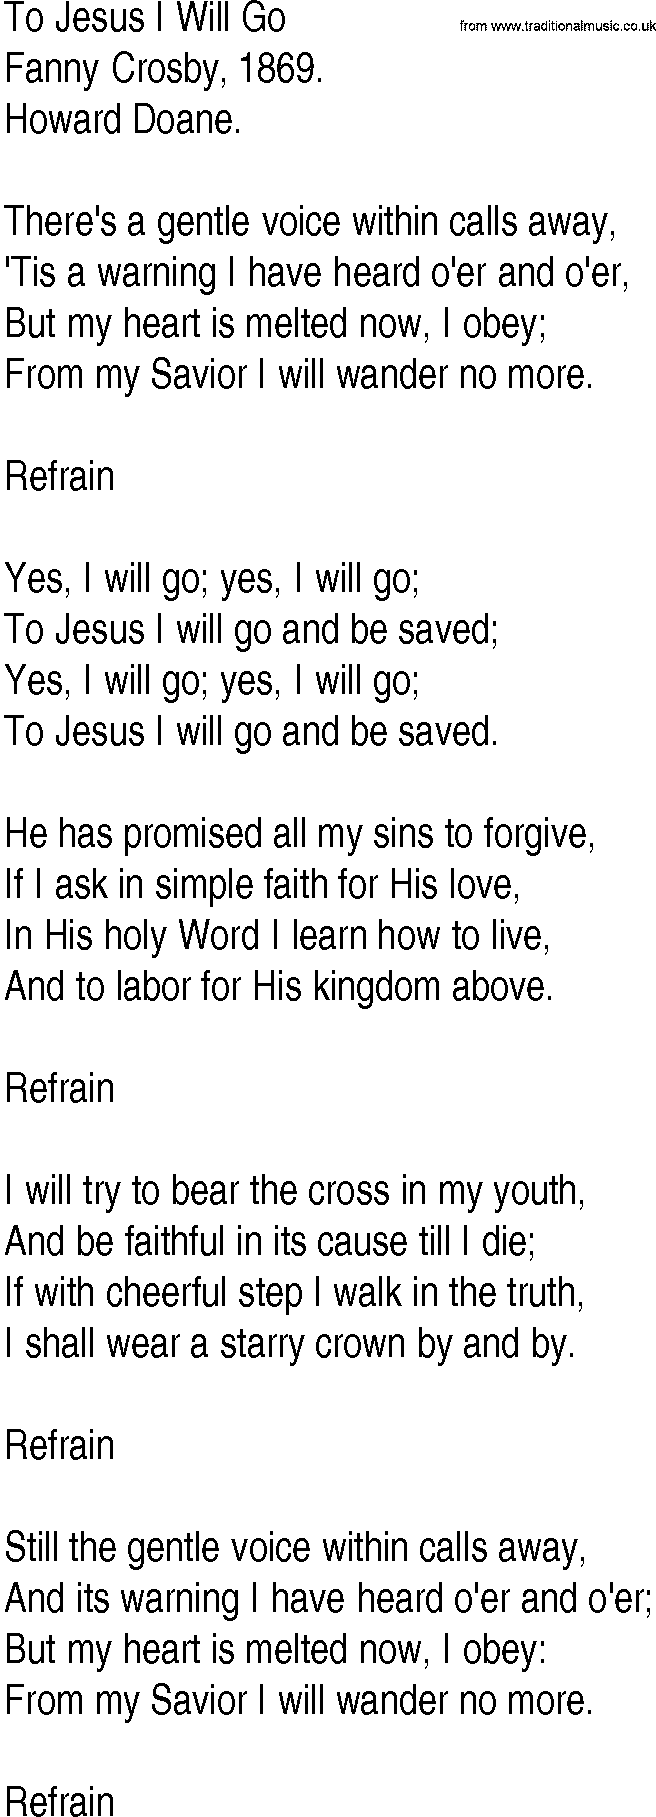 Hymn and Gospel Song: To Jesus I Will Go by Fanny Crosby lyrics